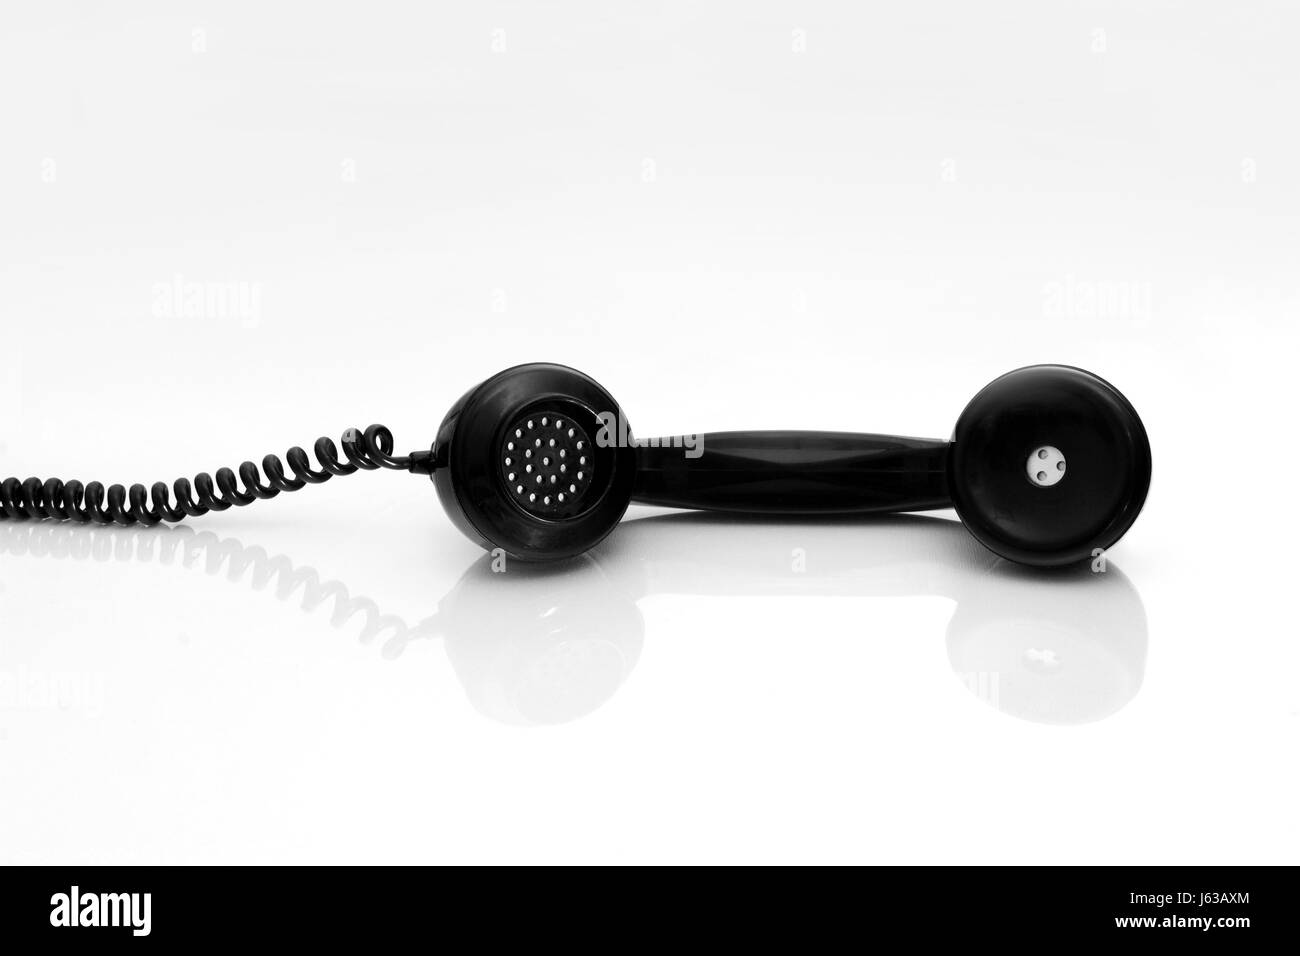 Número de teléfono de la nostalgia de antigüedades vintage comunicación antigua llamada timbre Foto de stock